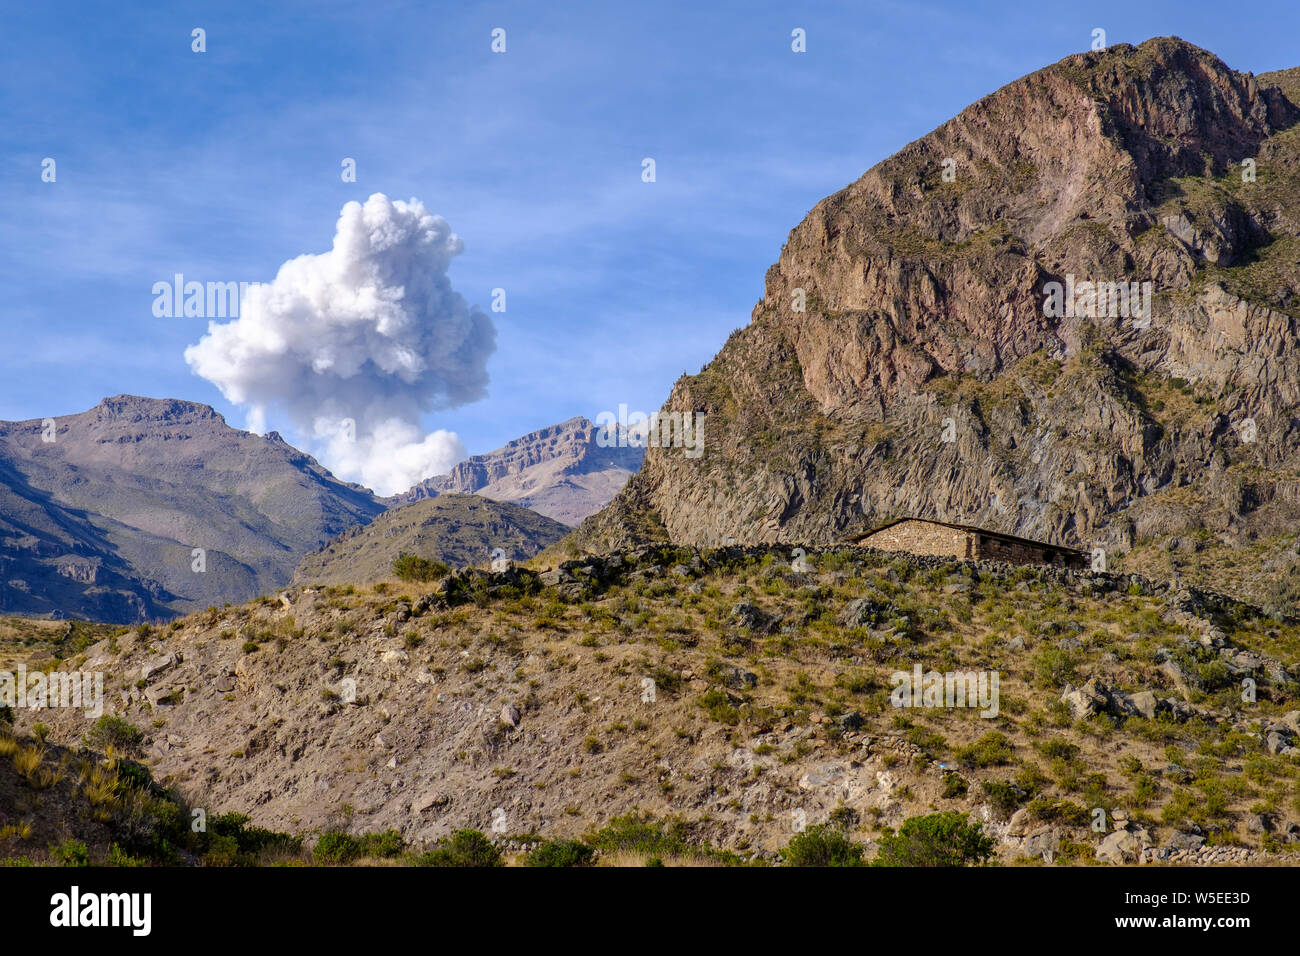 Plumes, eruption column from Sabancaya, an active volcano in the Peruvian Altiplano, Colca Canyon, Peru Stock Photo